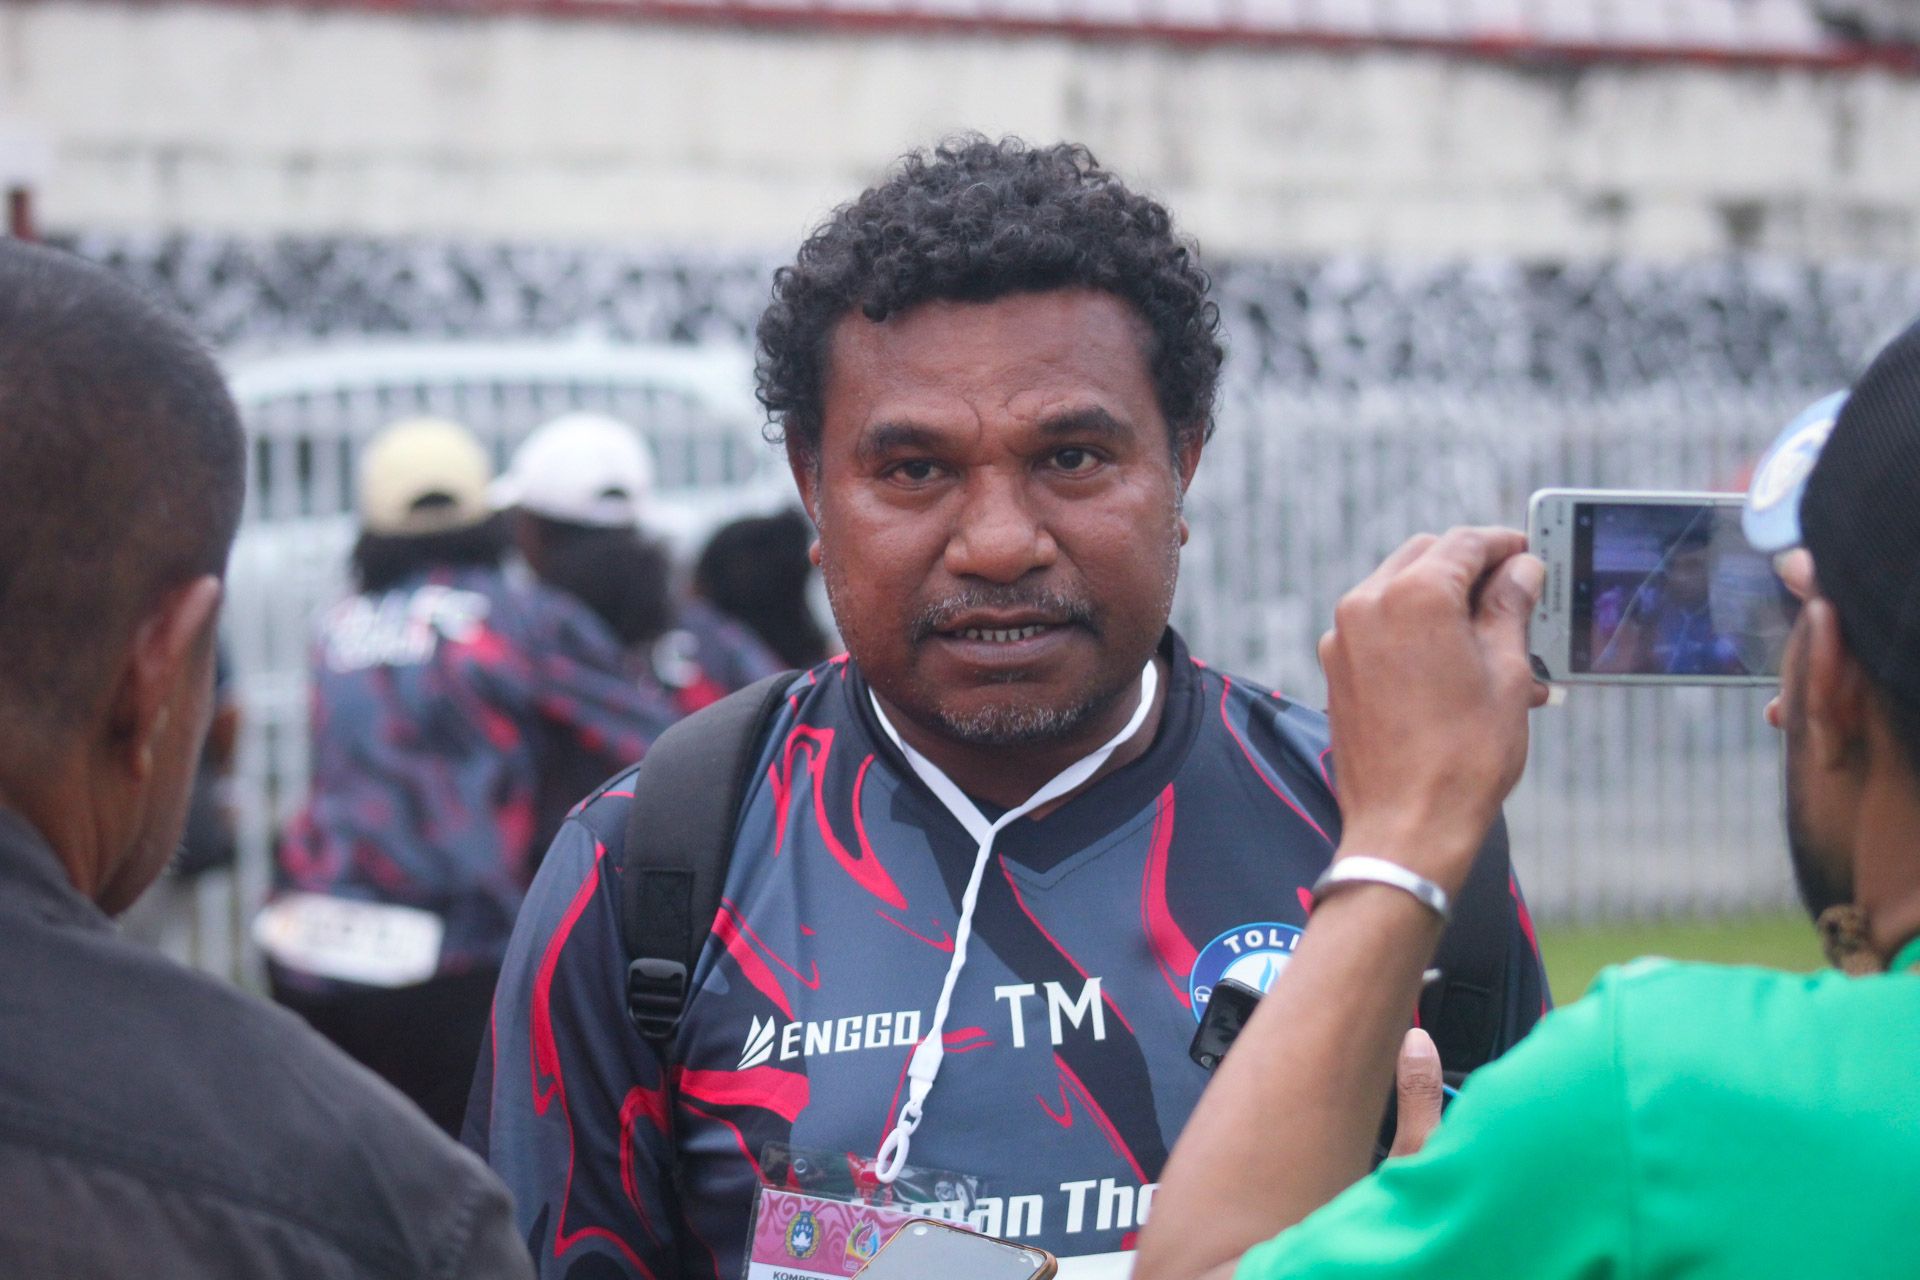 Pelatih kepala Toli Putri FC, Thomas Madjar ketika ditemui awak media olahraga usai pertandingan di Stadion Mandala, Kota Jayapura, Papua, Sabtu 04 Maret 2023 dok (PORTAL PAPUA)